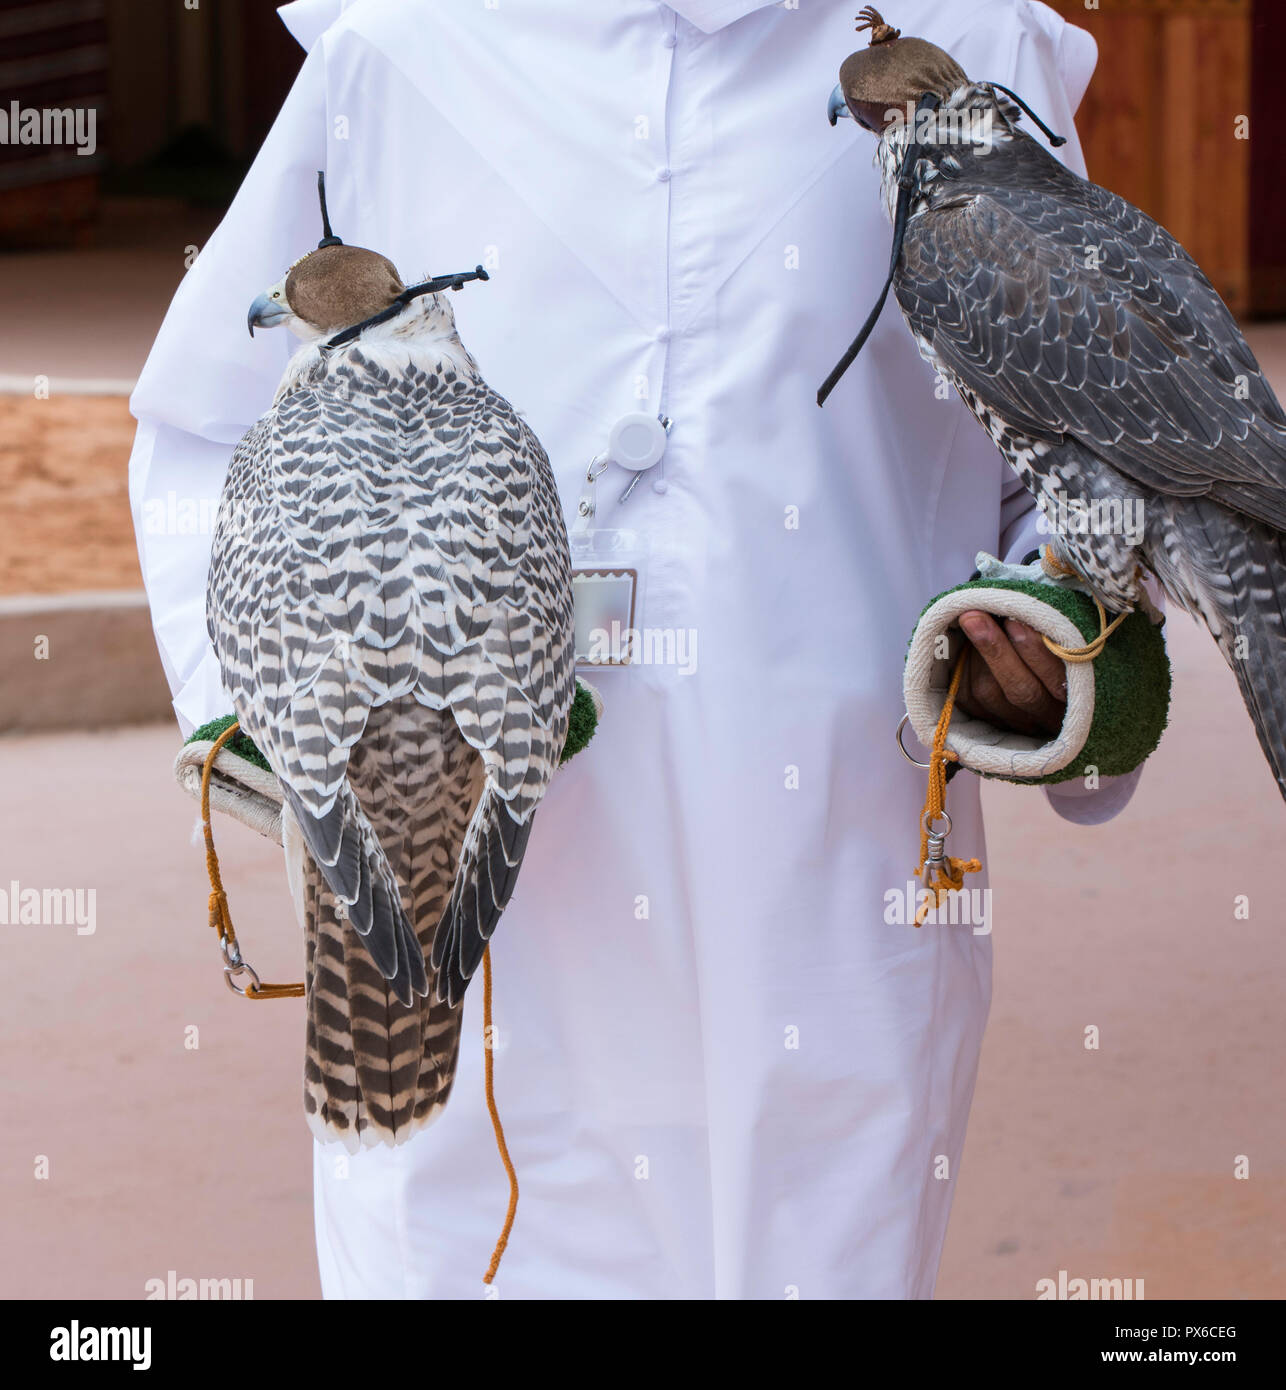 Arabian falcon with head cover Stock Photo